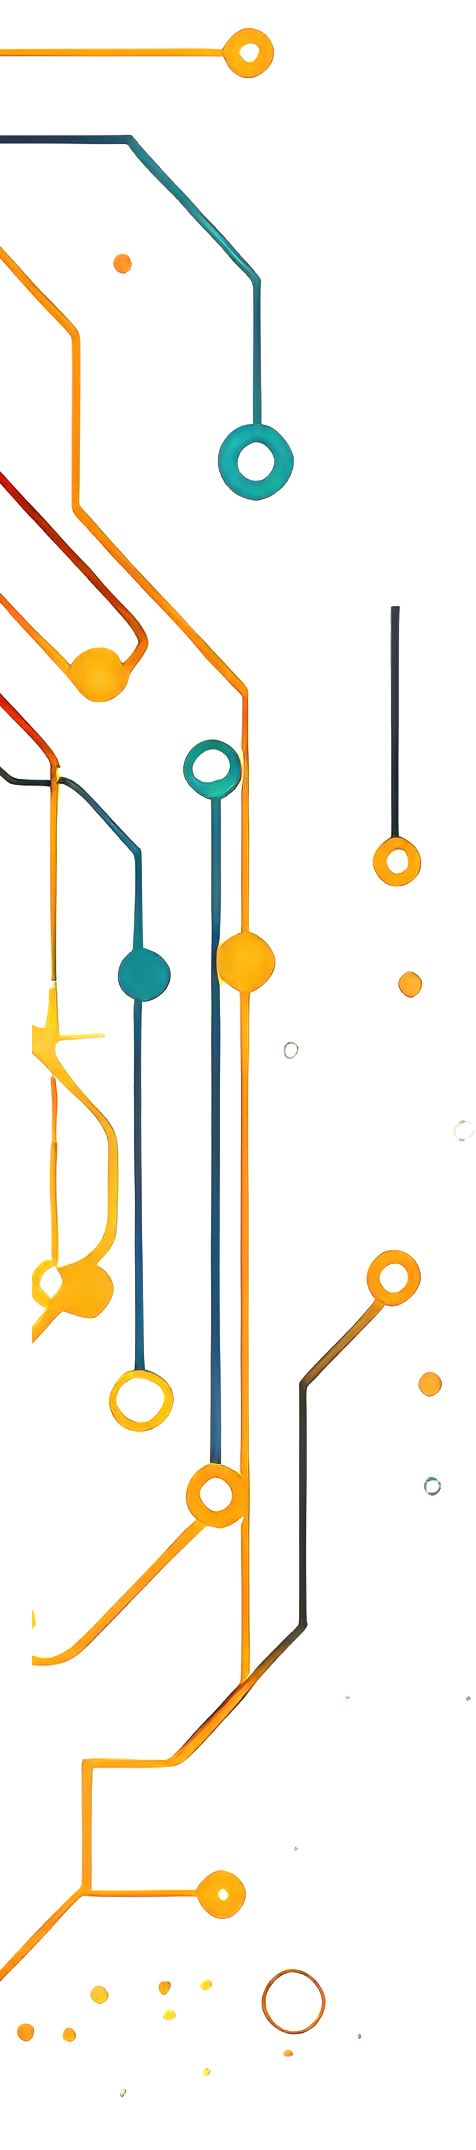 Illustrated circuitry